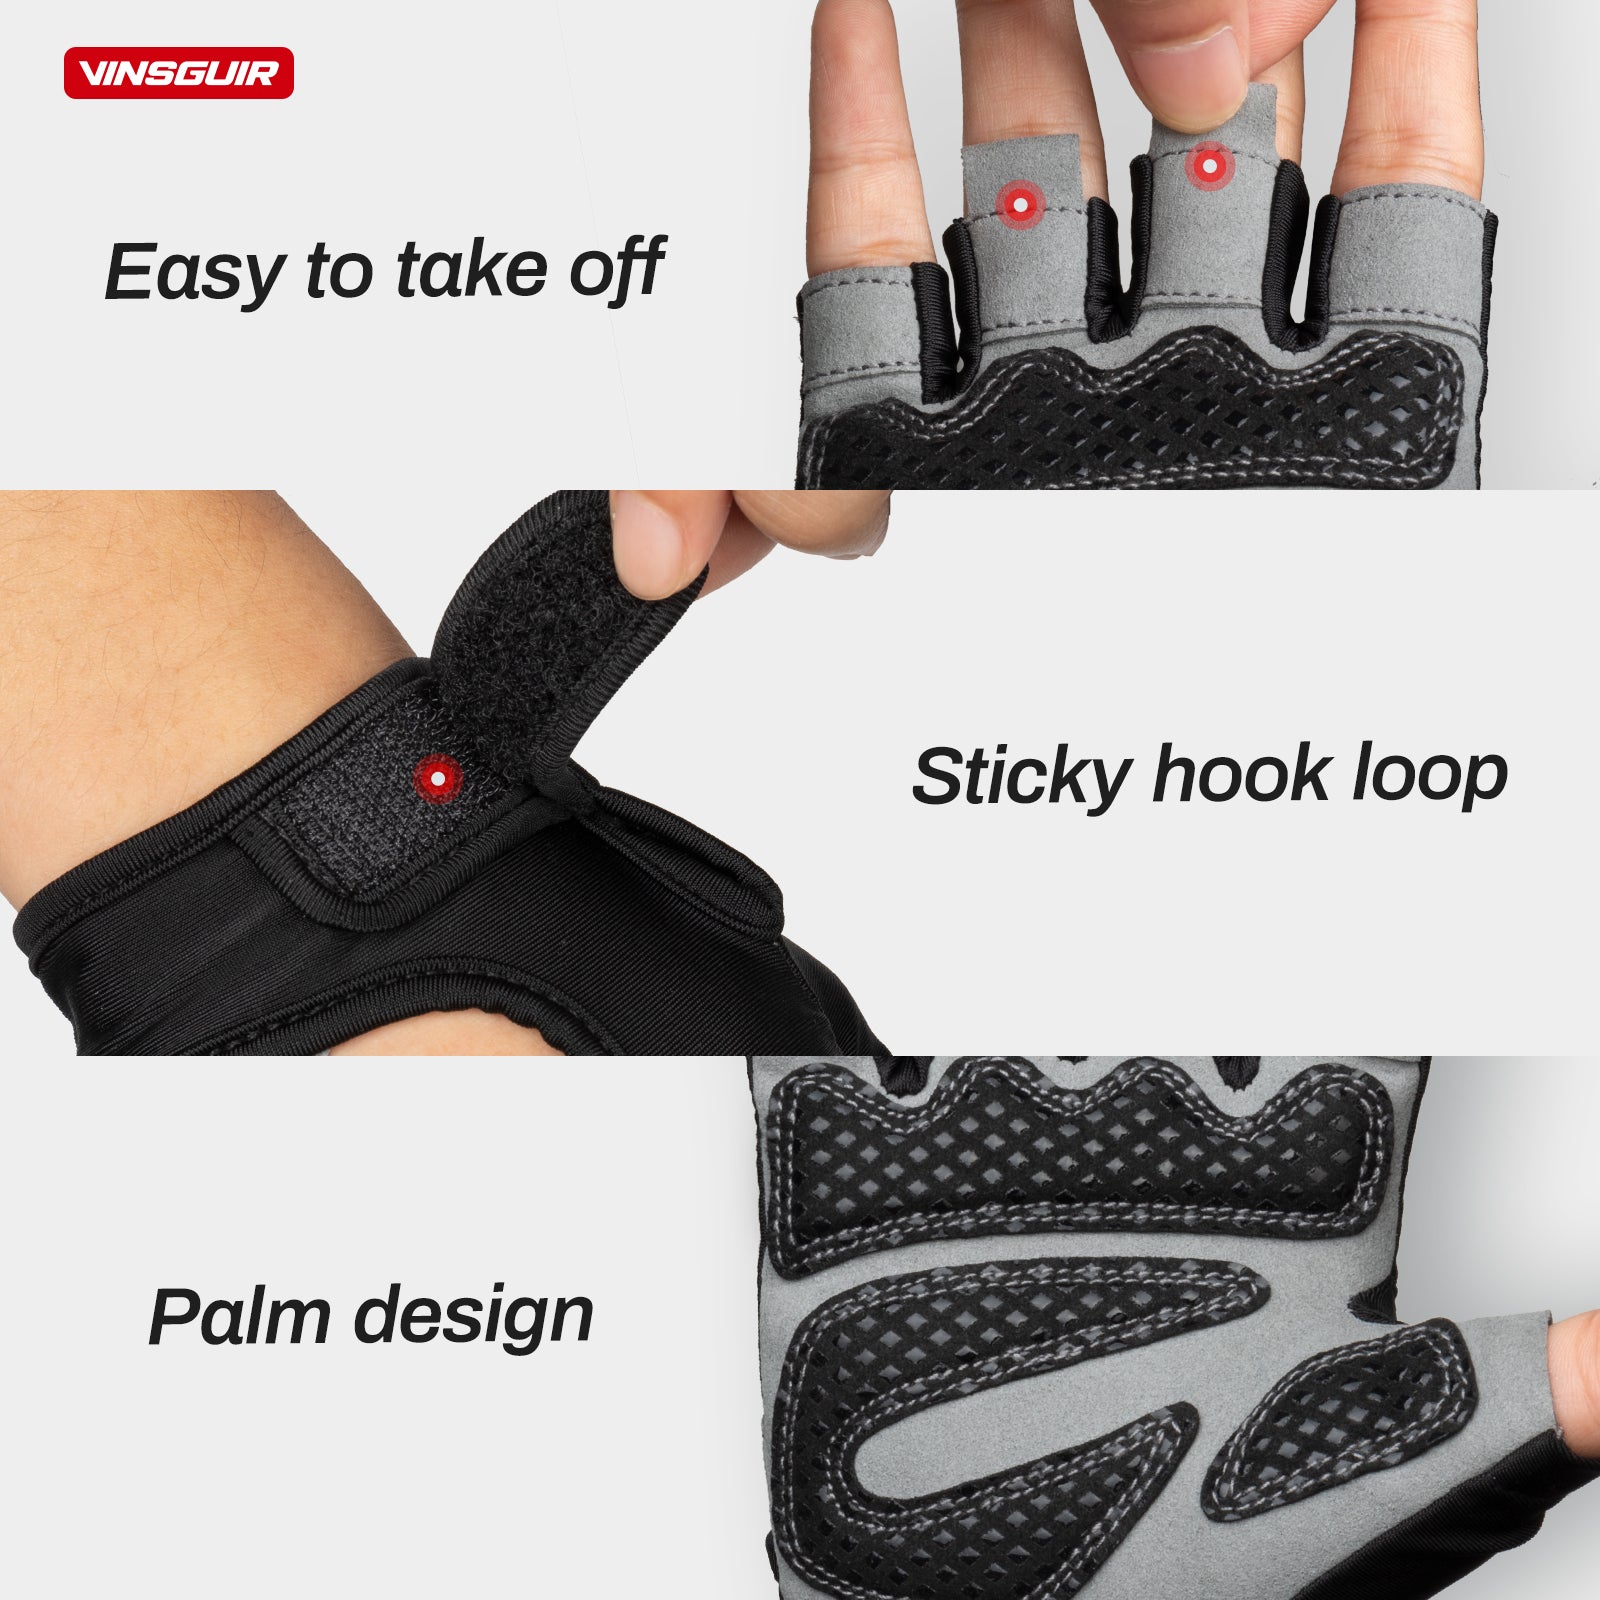 Vinsguir Workout Gloves for Men and Women – Trideer